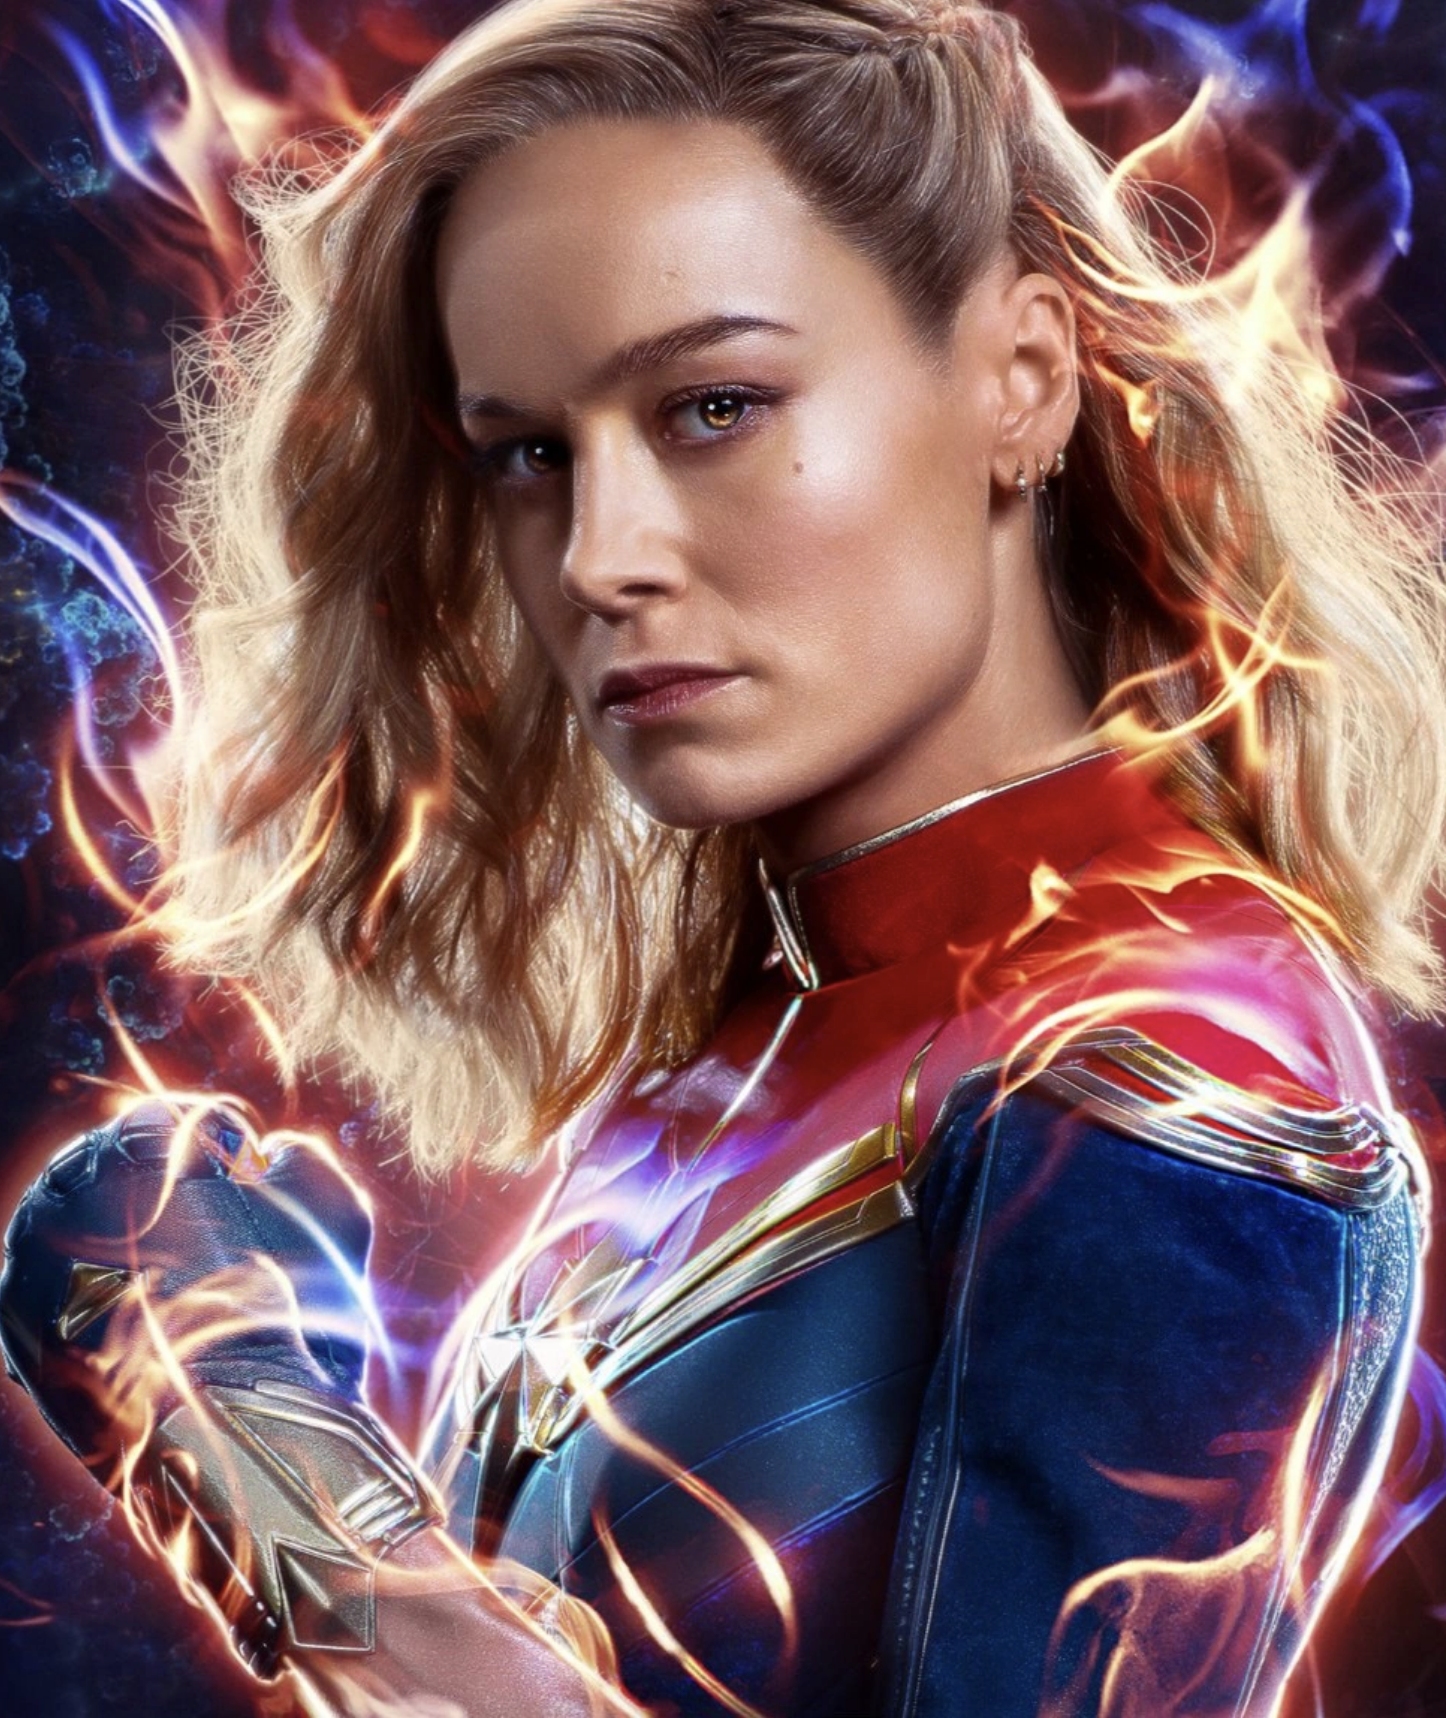 Captain Marvel comic makes Brie Larson reference